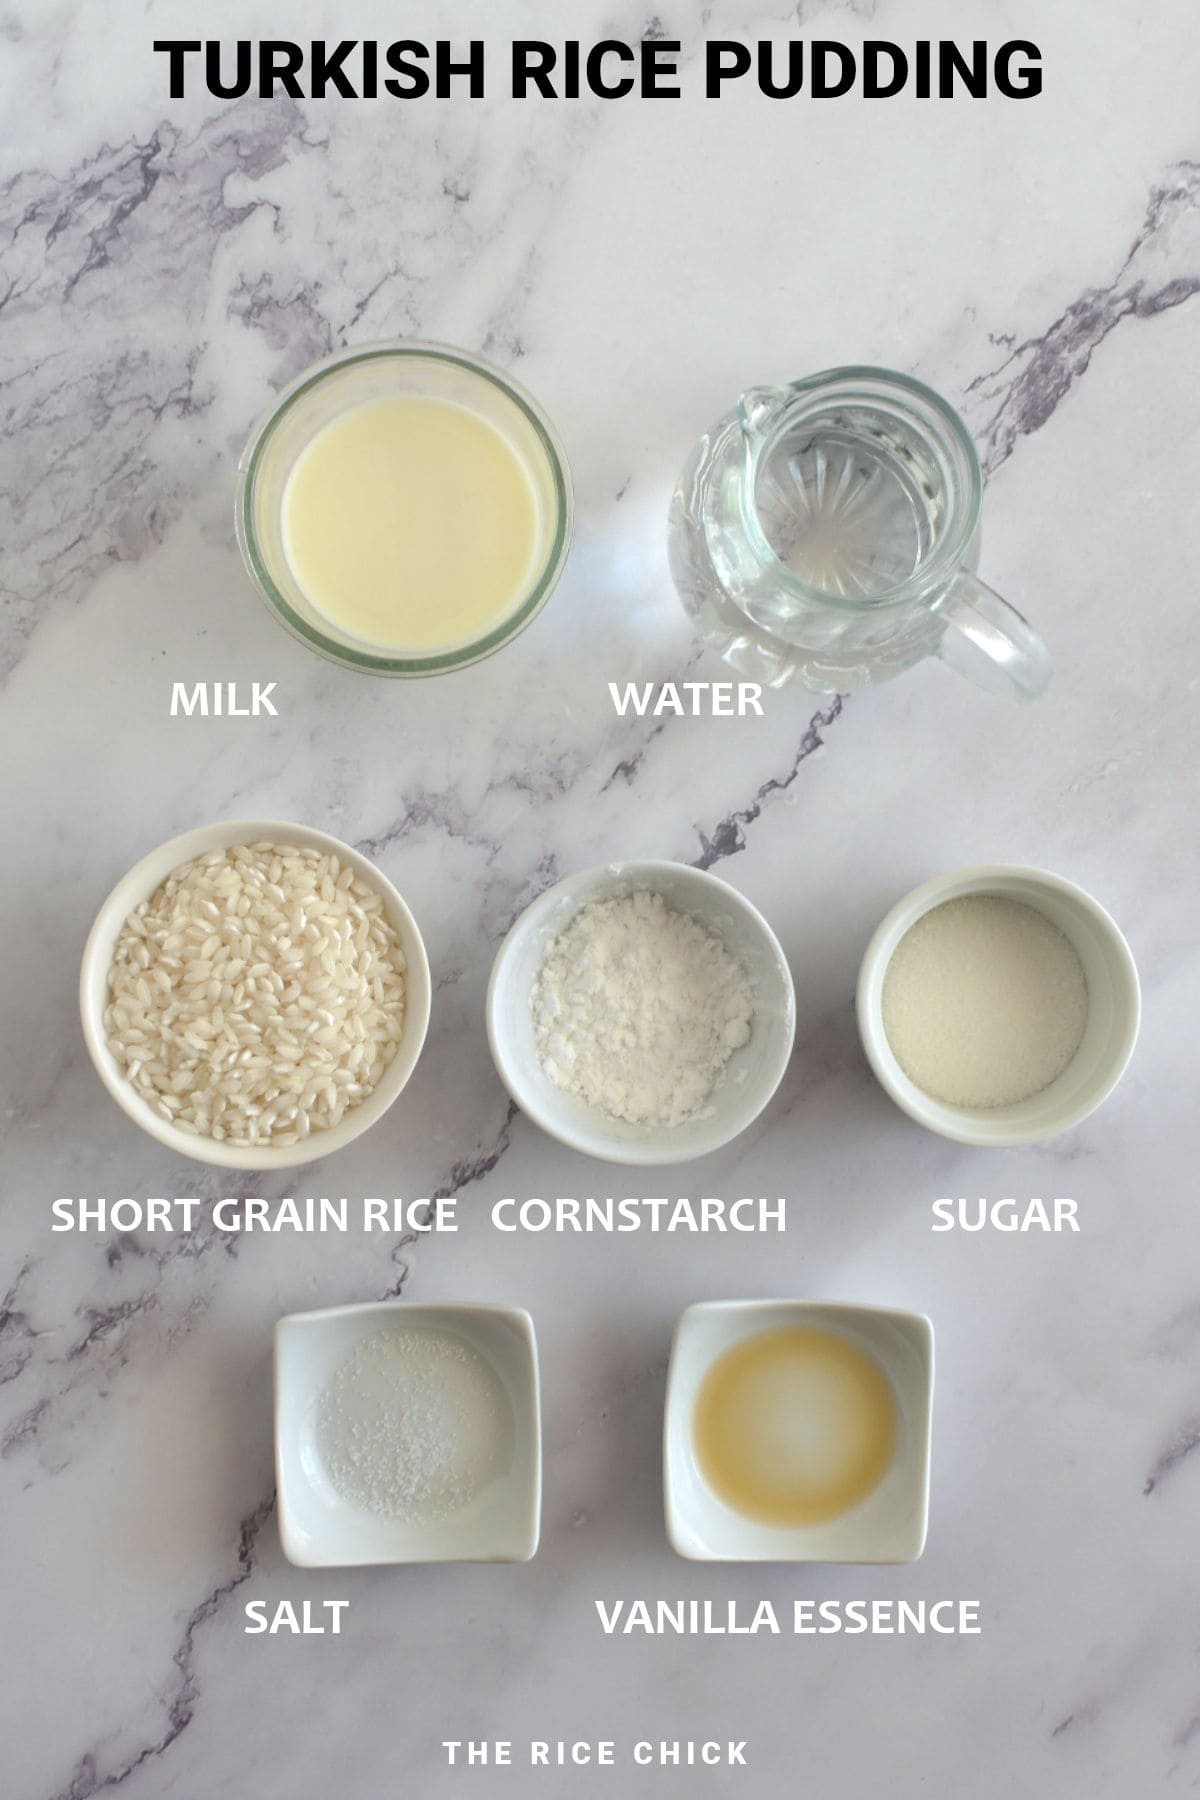 Ingredients for Turkish rice pudding.